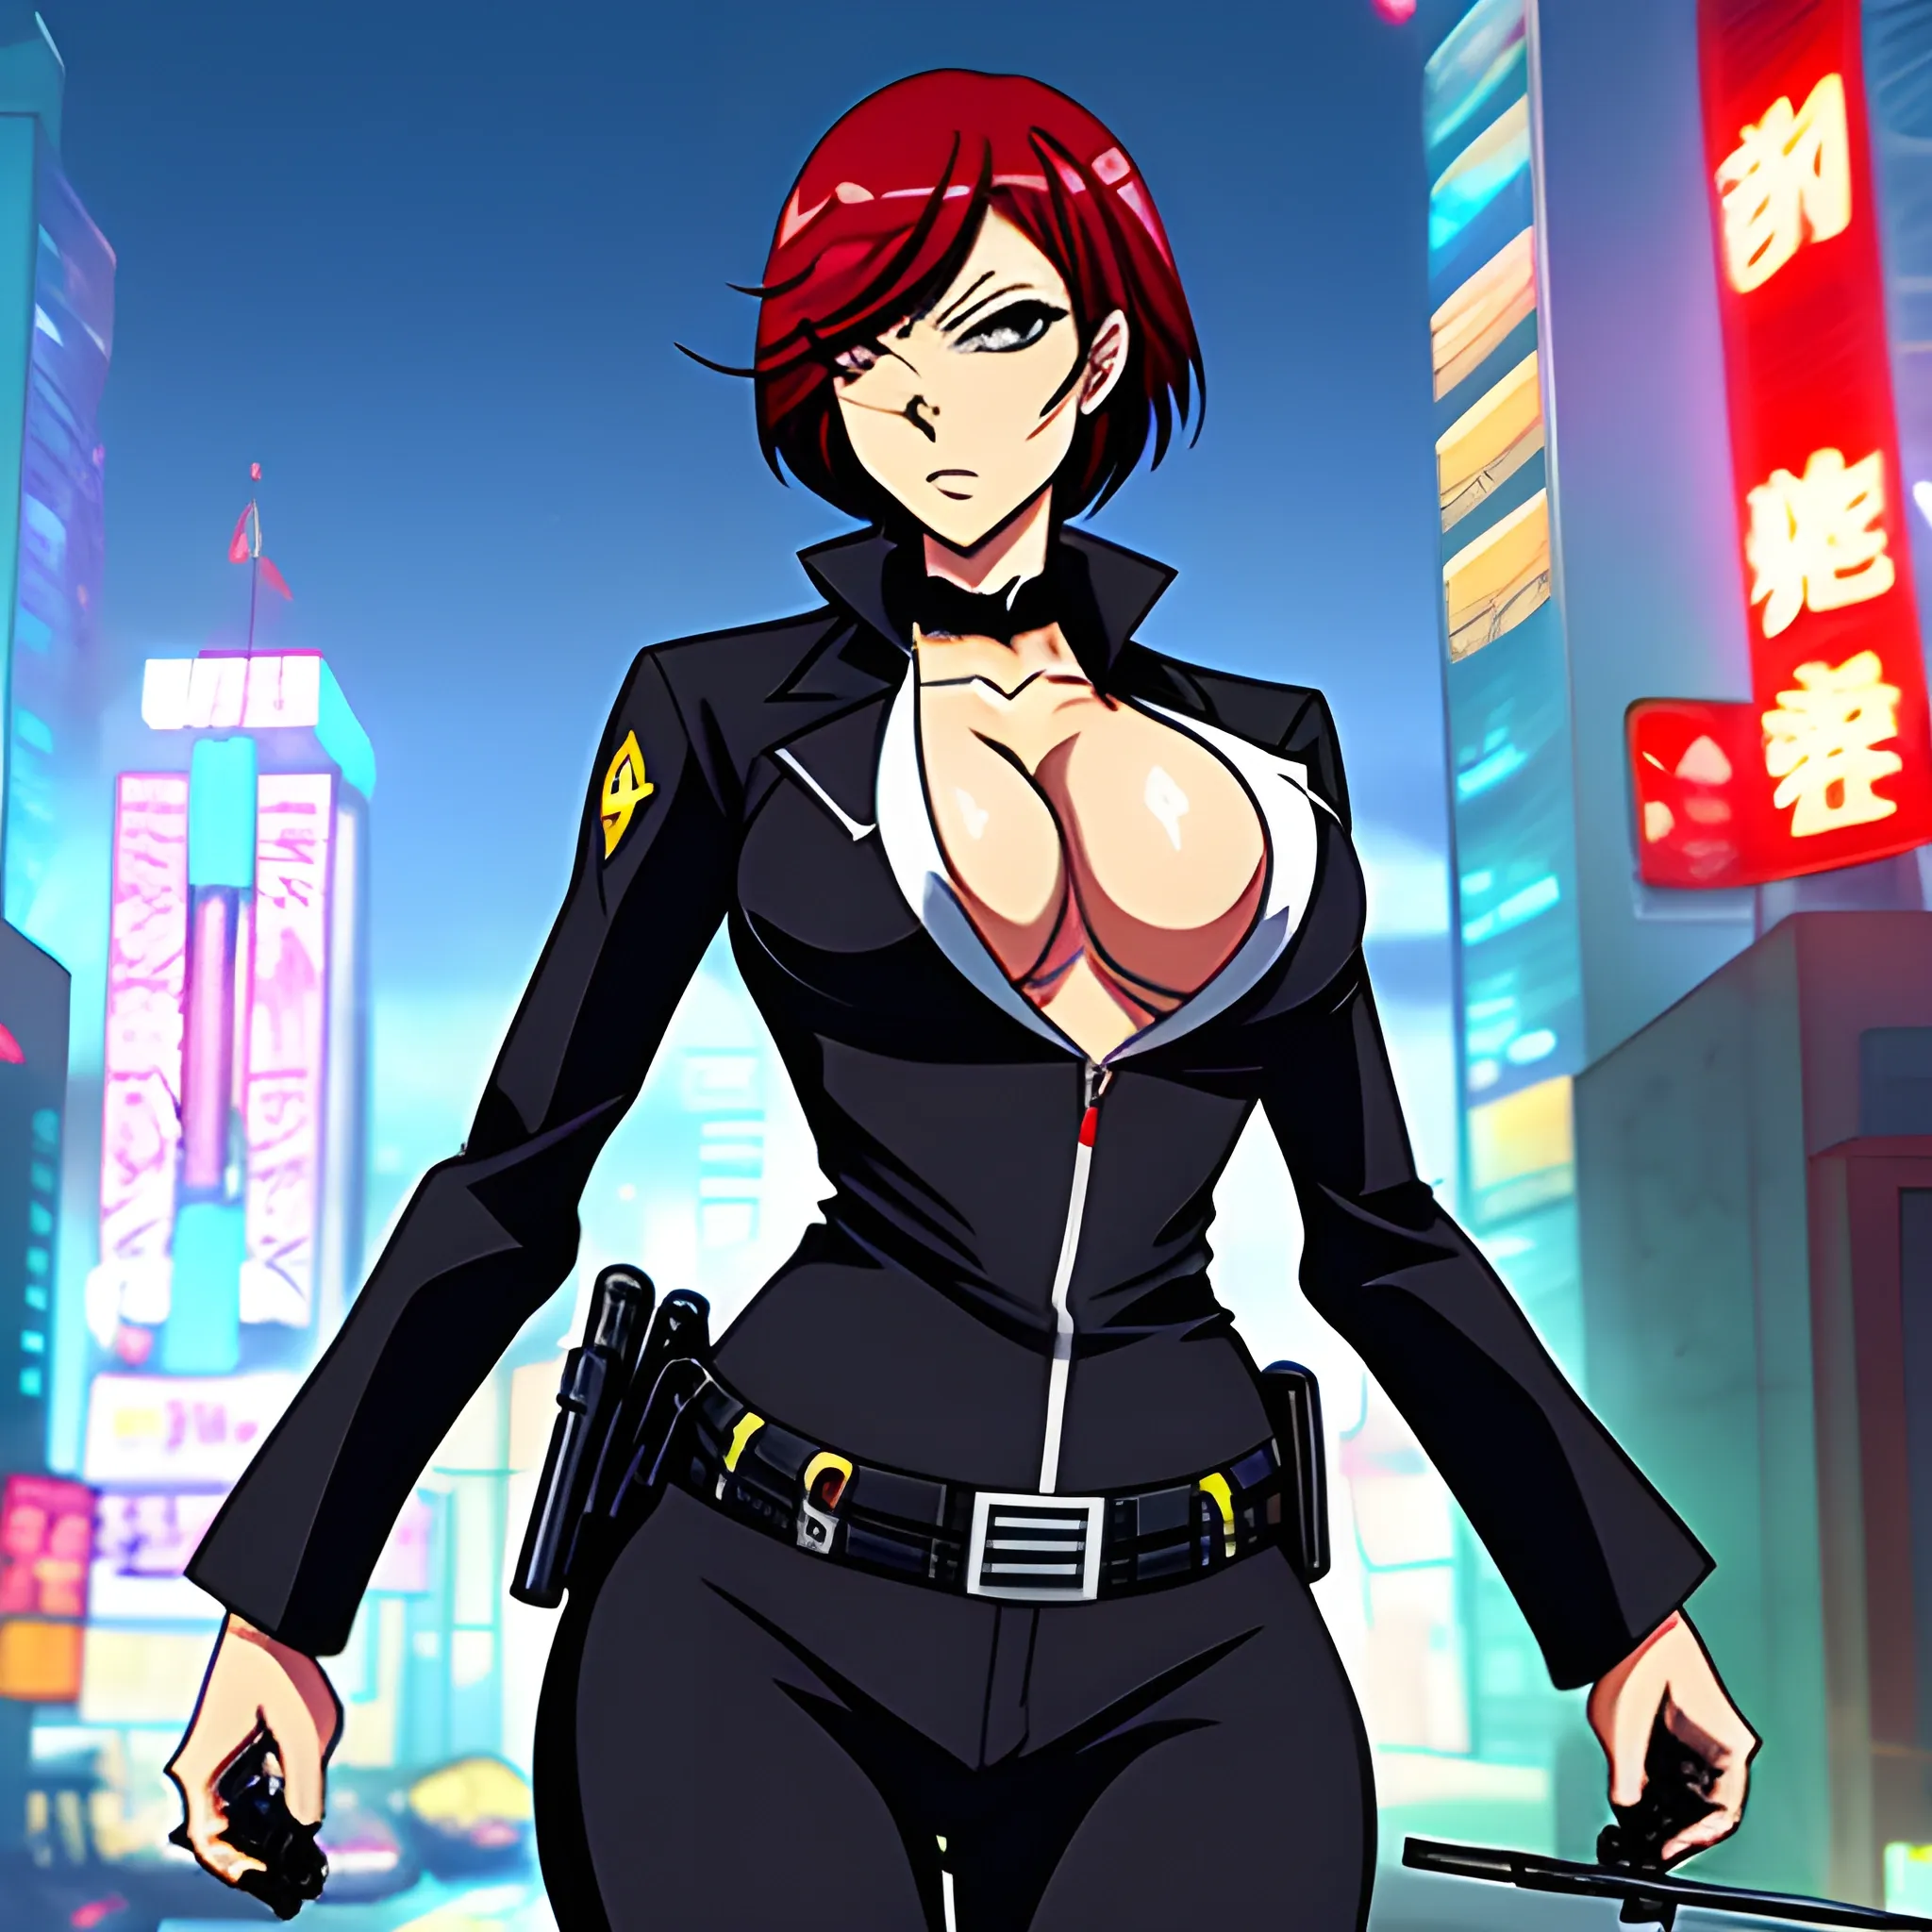 anime girl gangster shot in police city area 